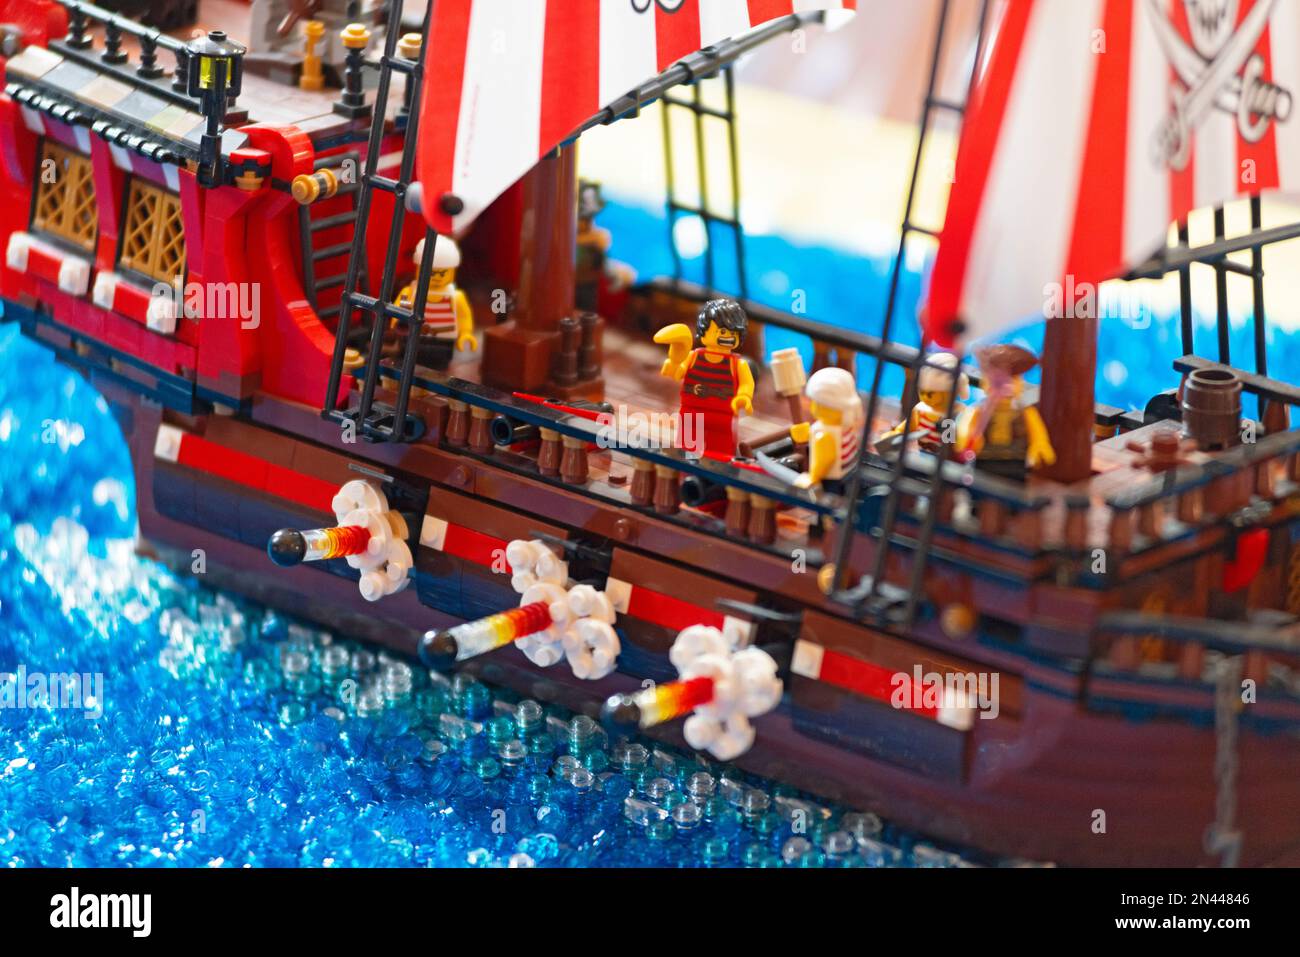 Lego Pirati dei Caraibi Foto stock - Alamy